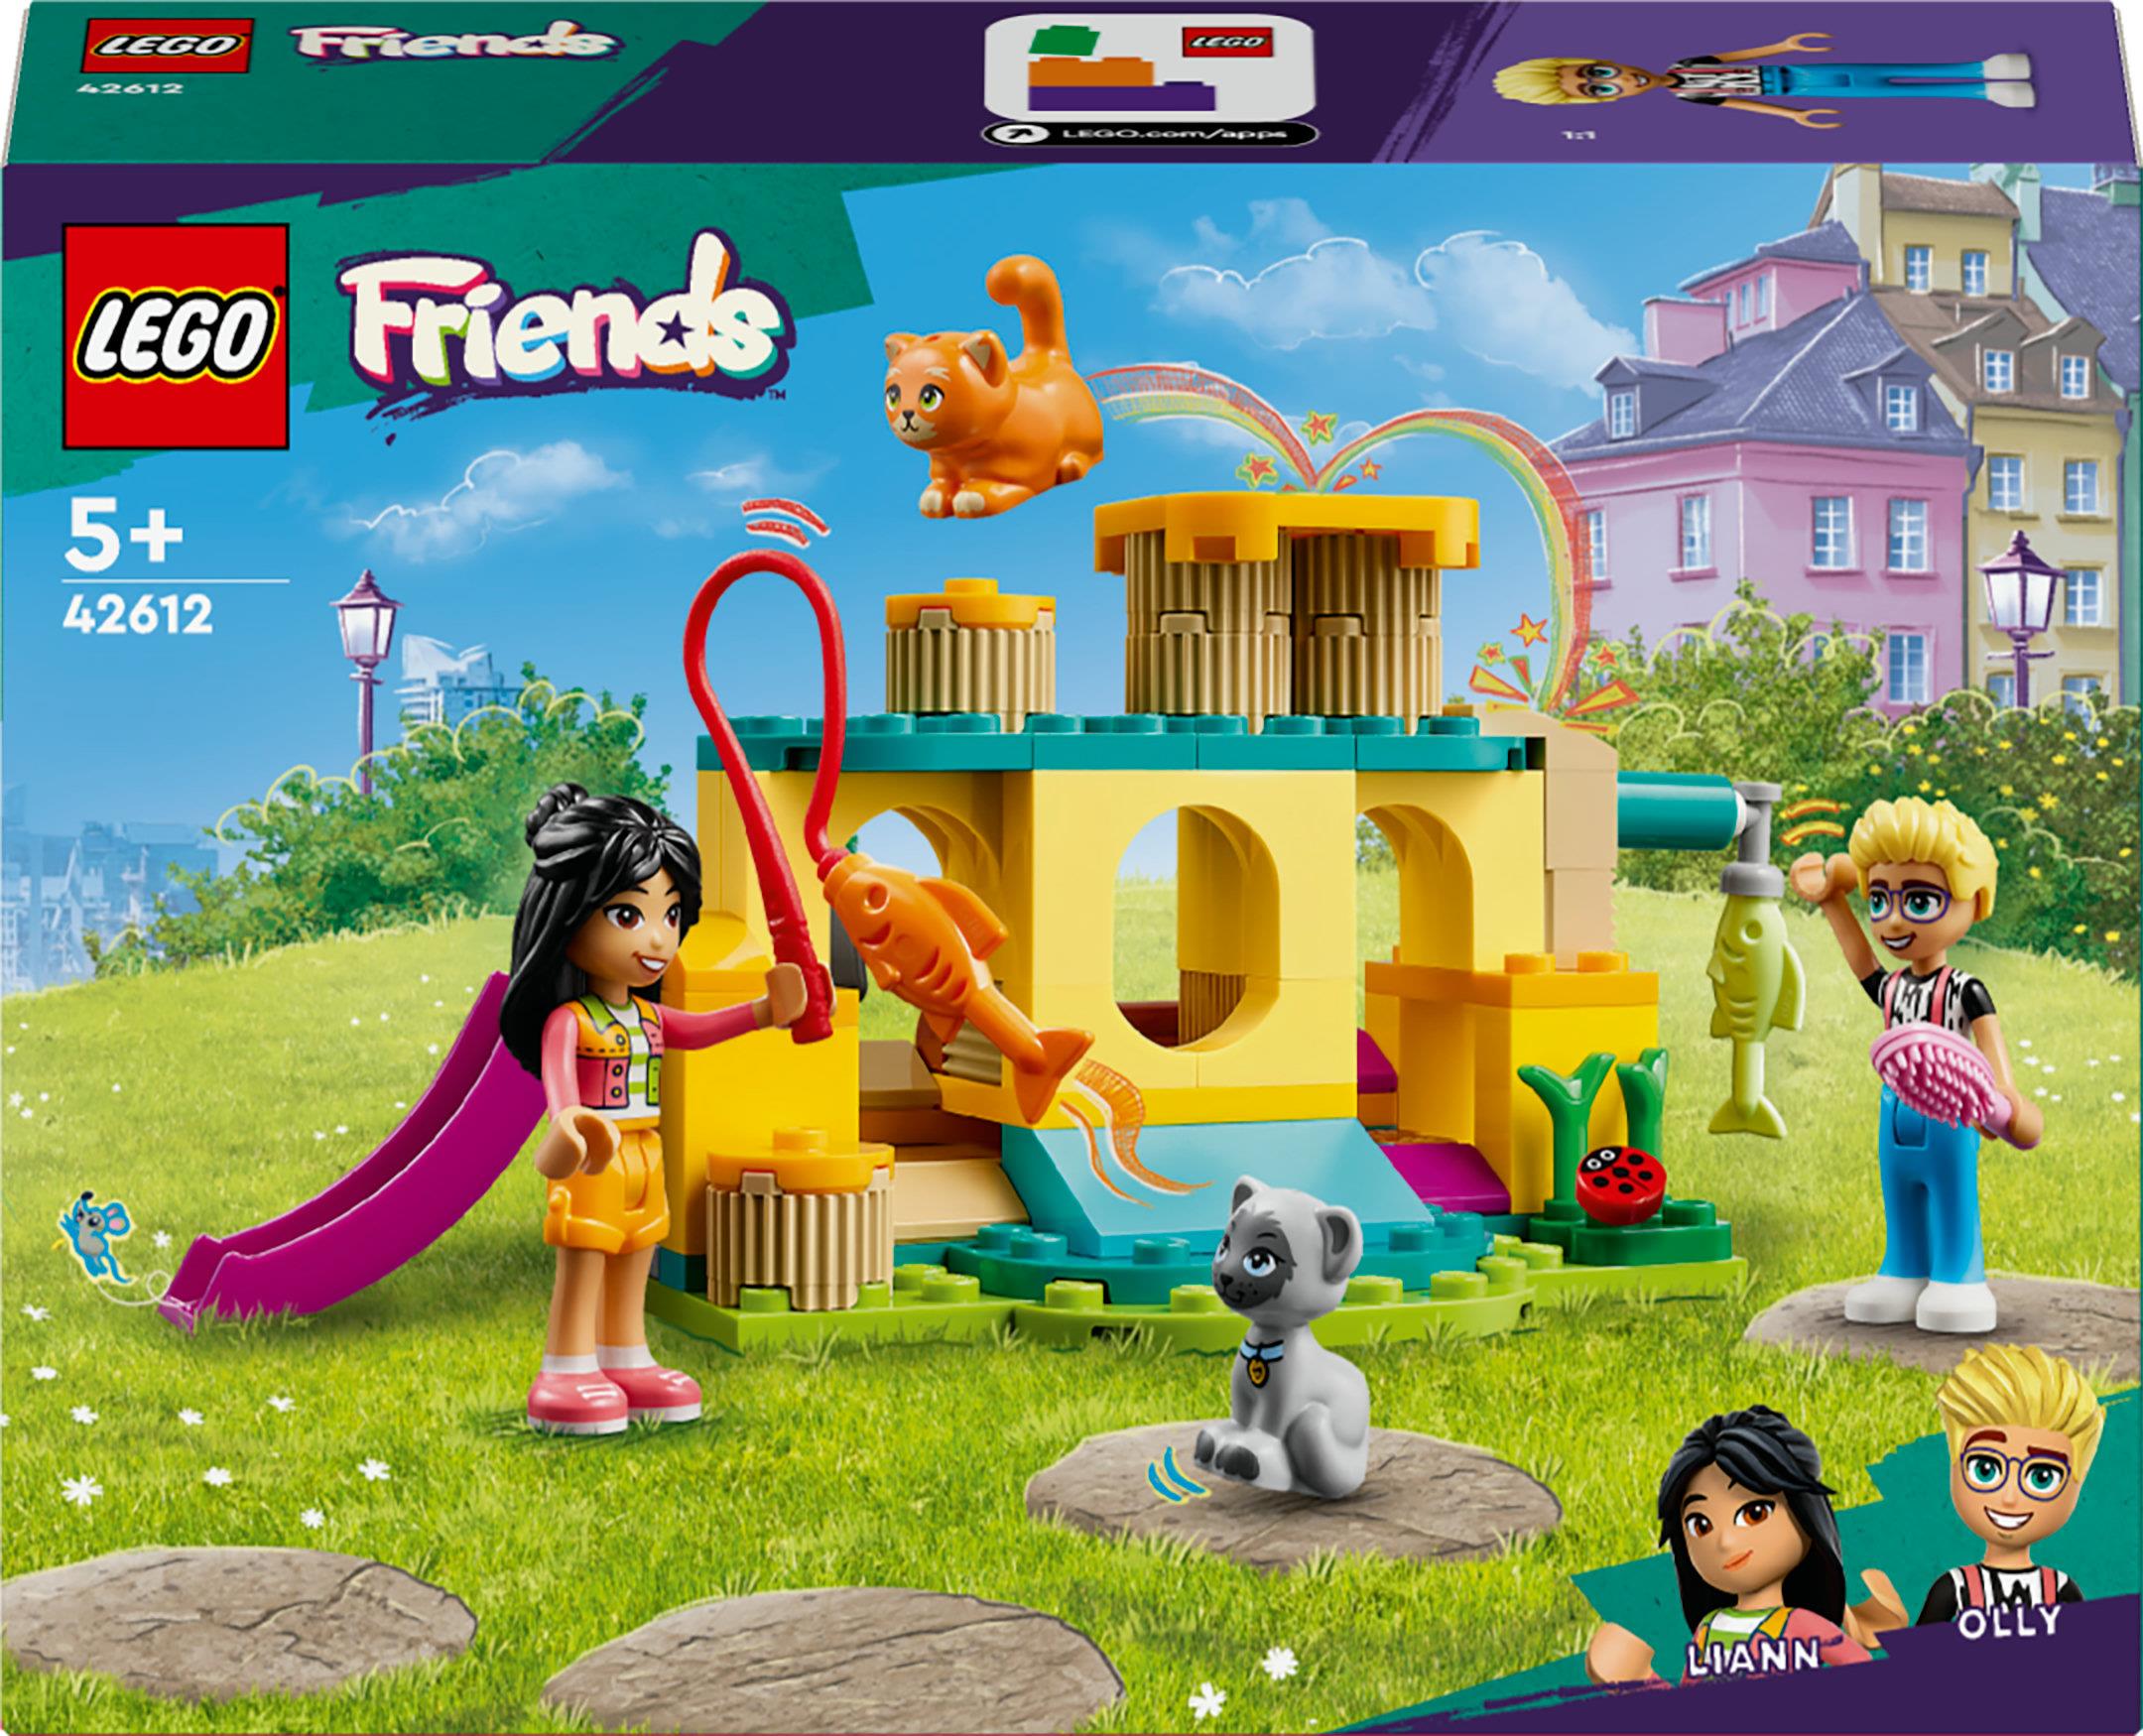 LEGO Friends 42612 Avventure